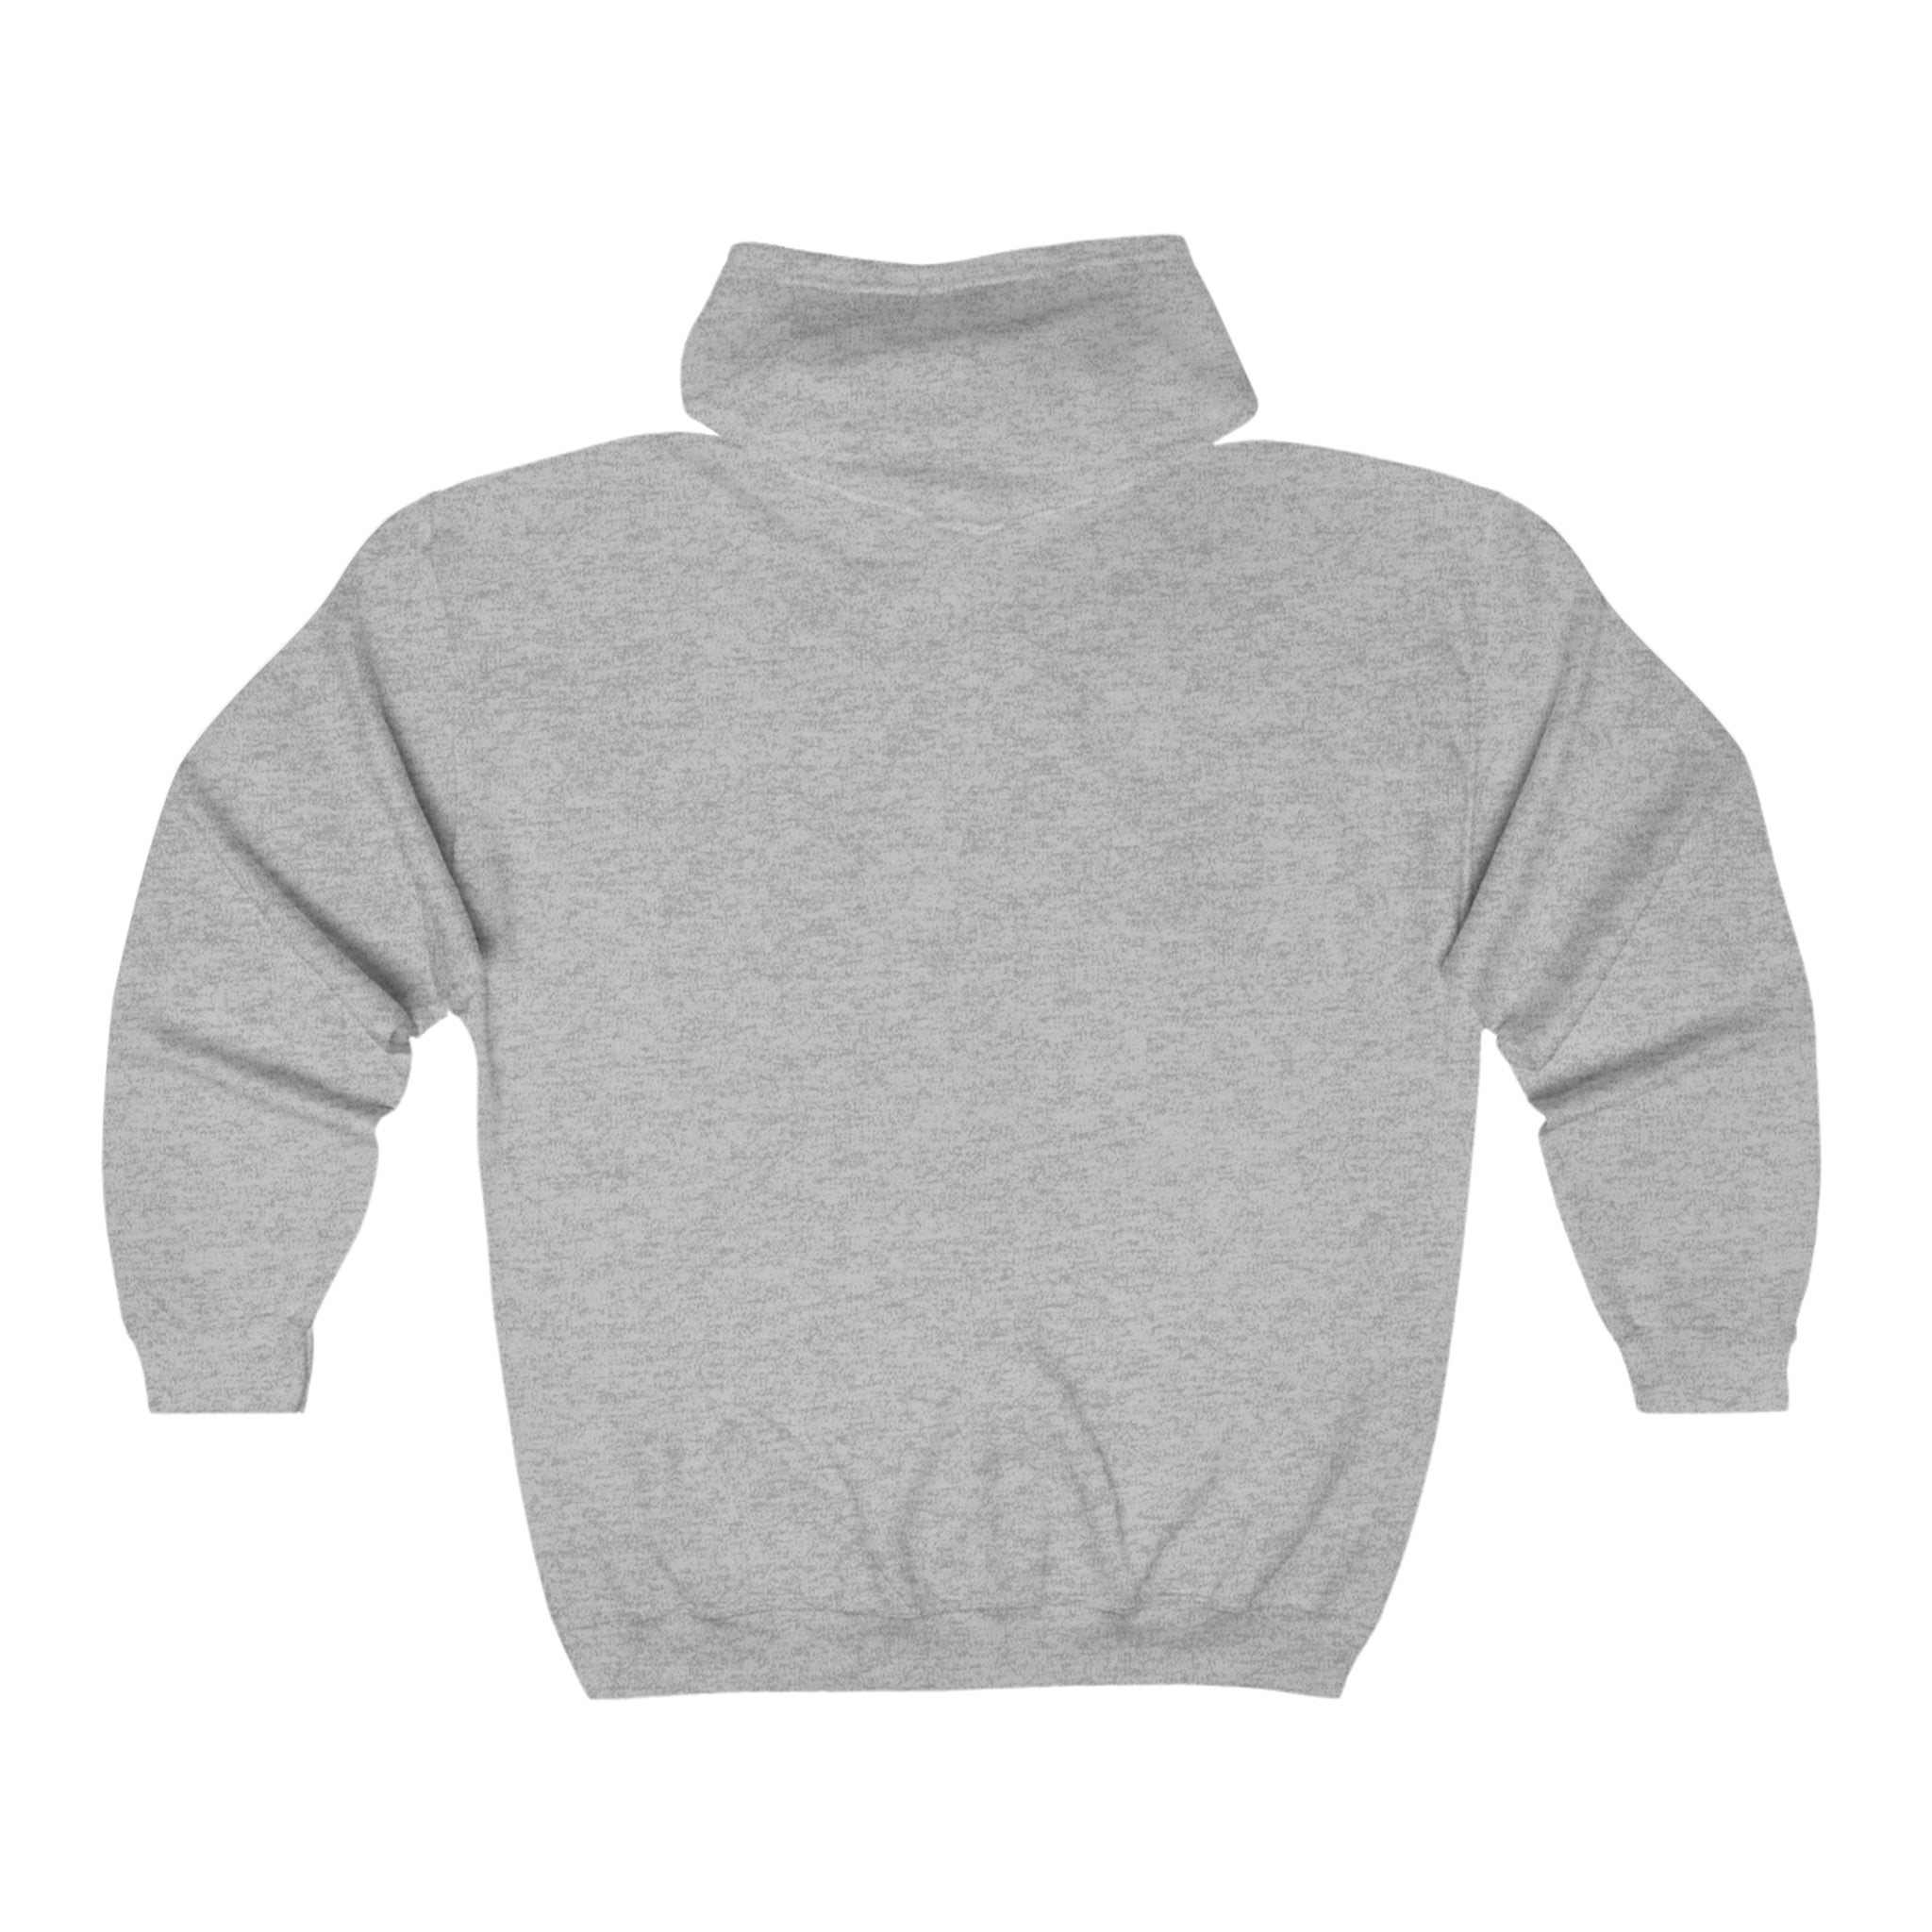 New Peak x Heavy Blend™ Full Zip Hooded Sweatshirt